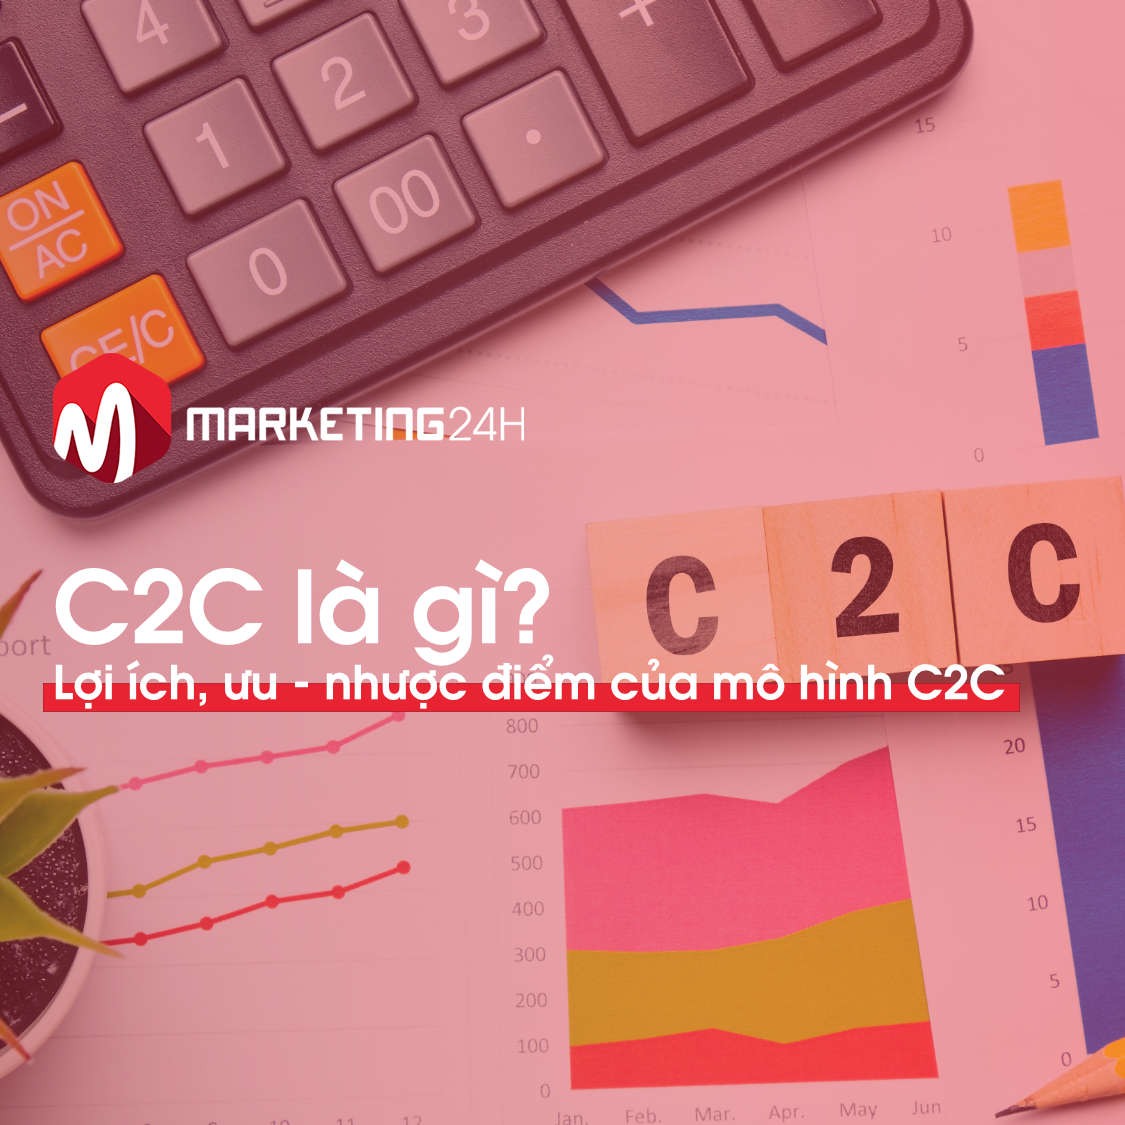 C2C-la-gi-Marketing24h.vn